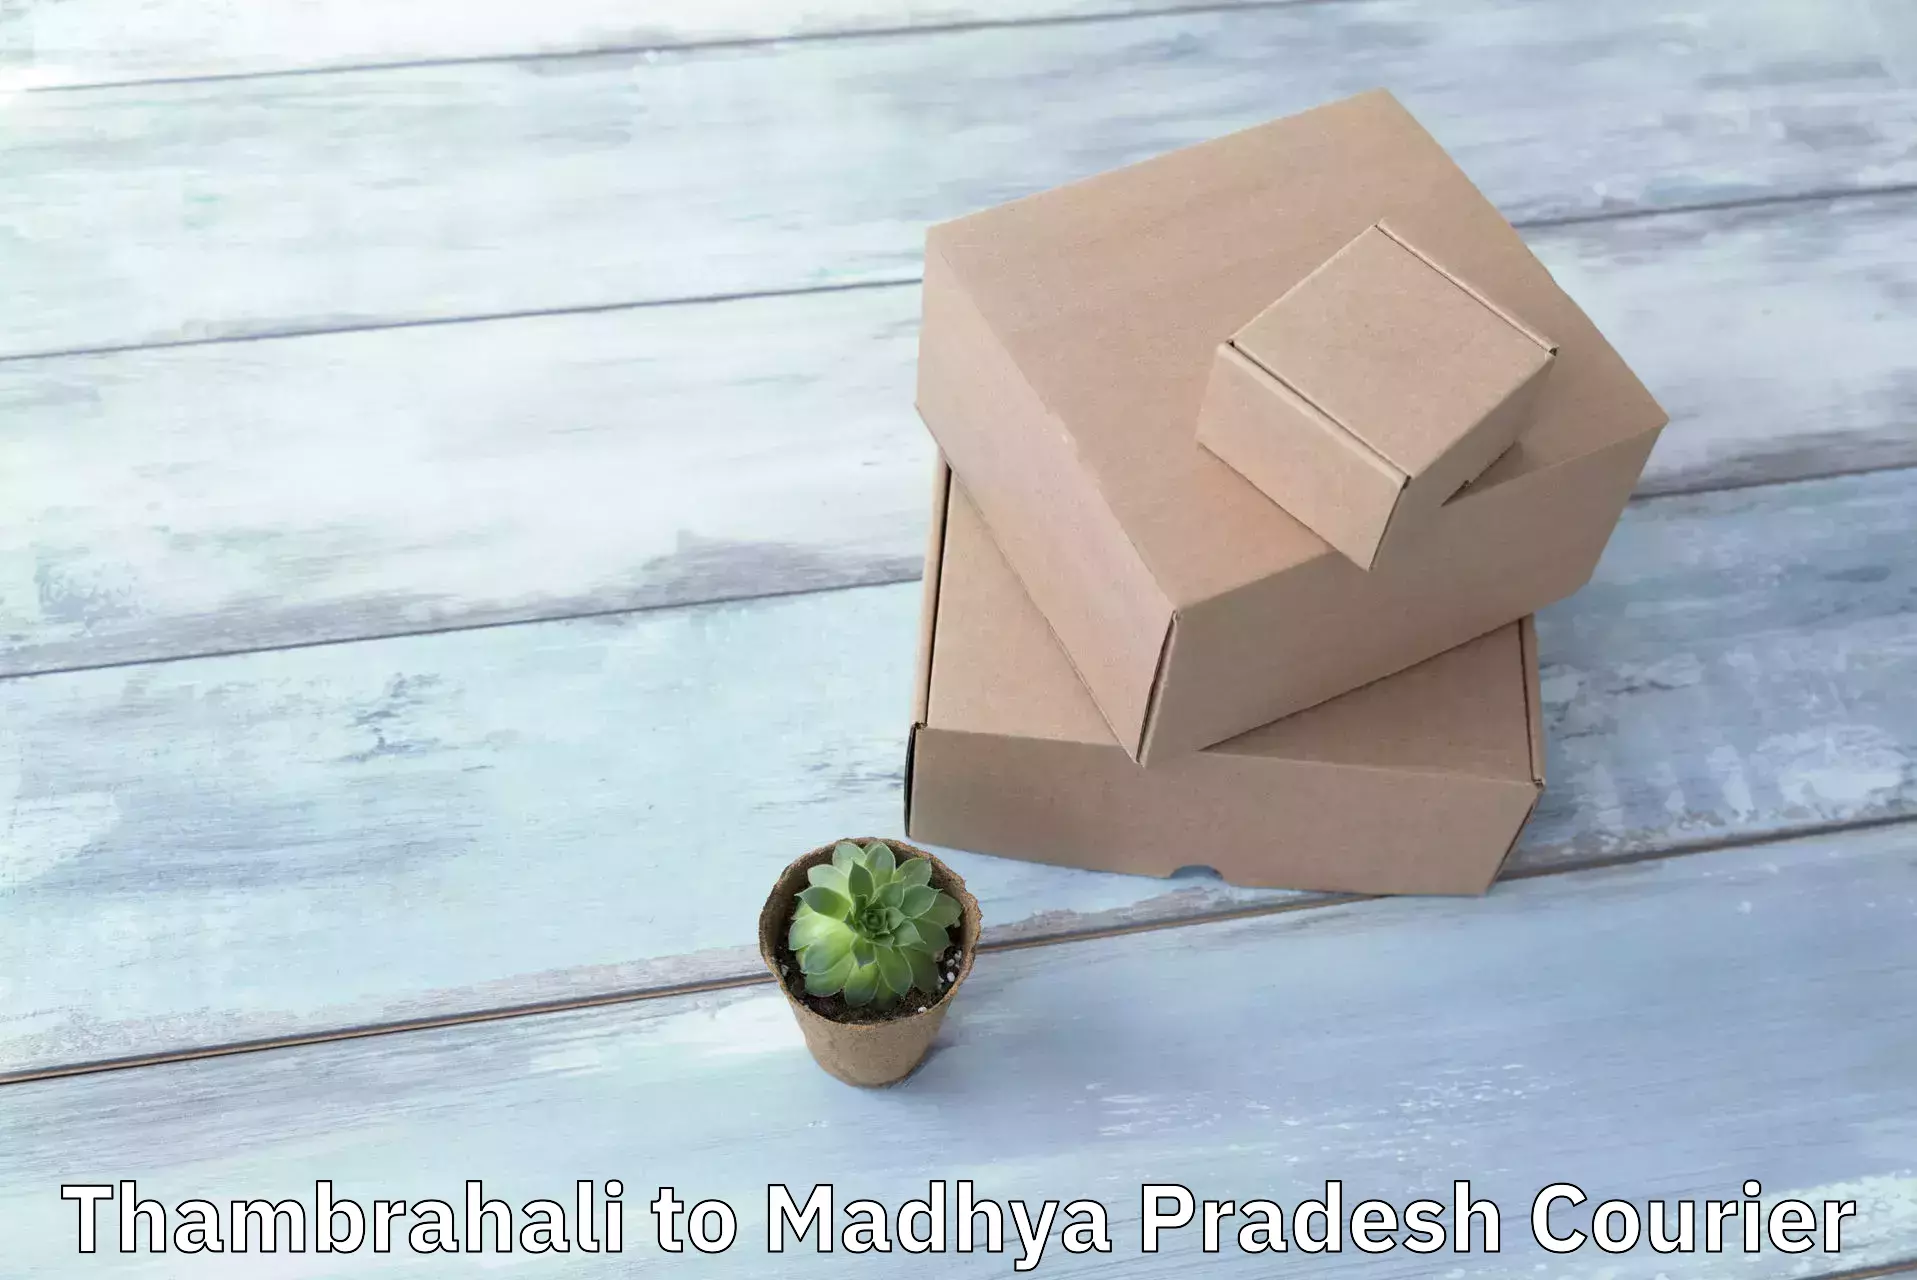 Innovative logistics solutions Thambrahali to Madhya Pradesh